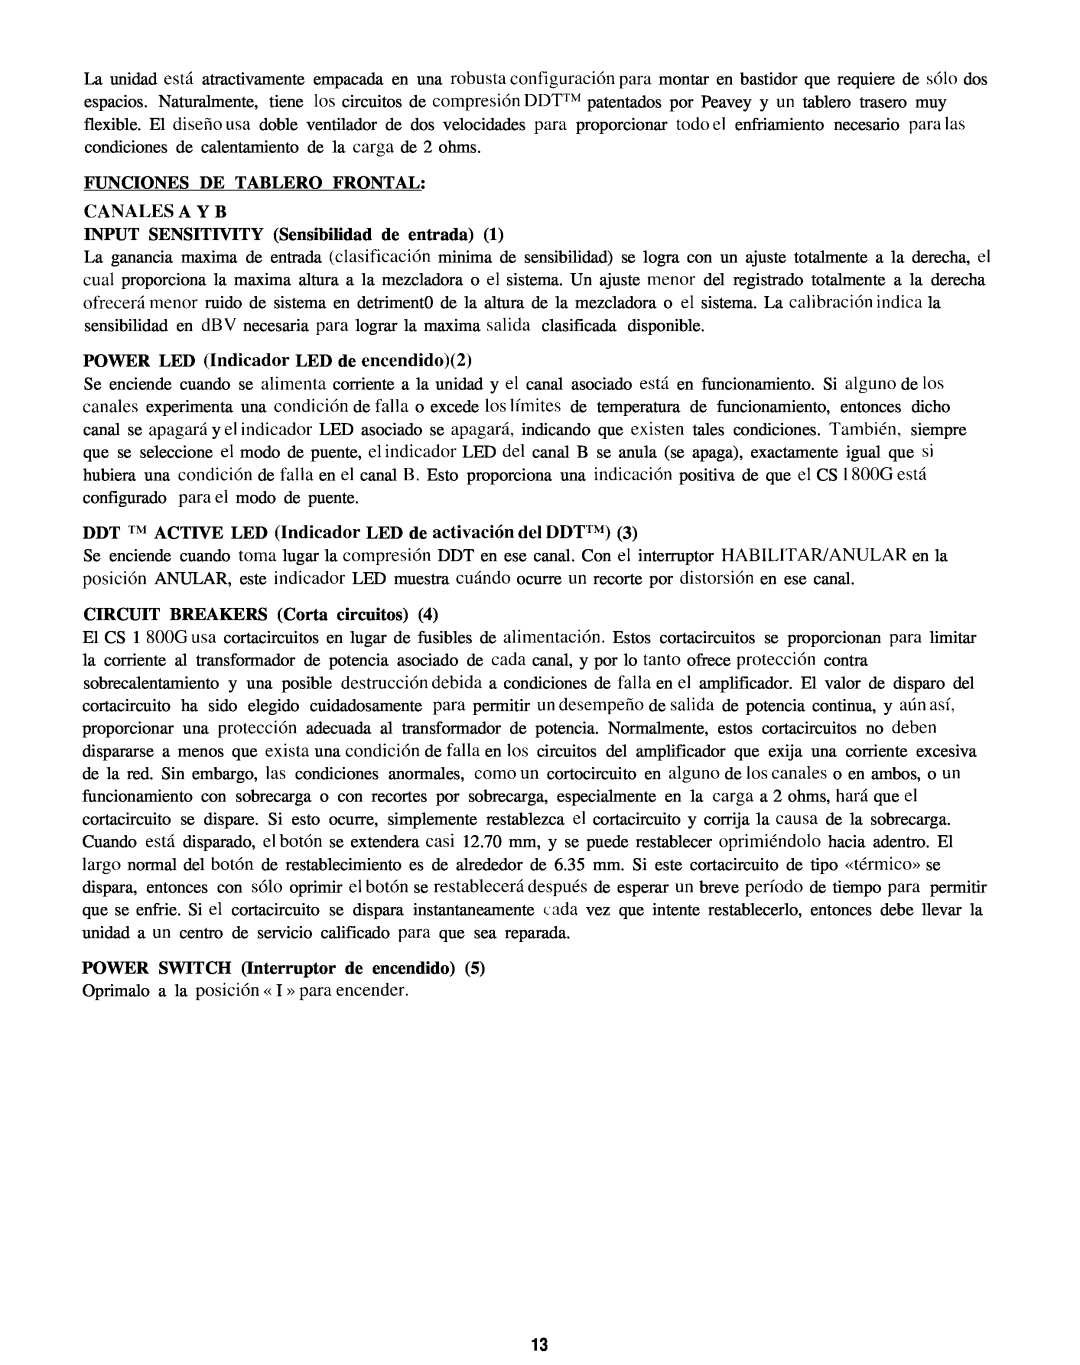 Peavey CS 1800G manual Funciones De Tablero Frontal Canales A Y B, INPUT SENSITIVITY Sensibilidad de entrada 